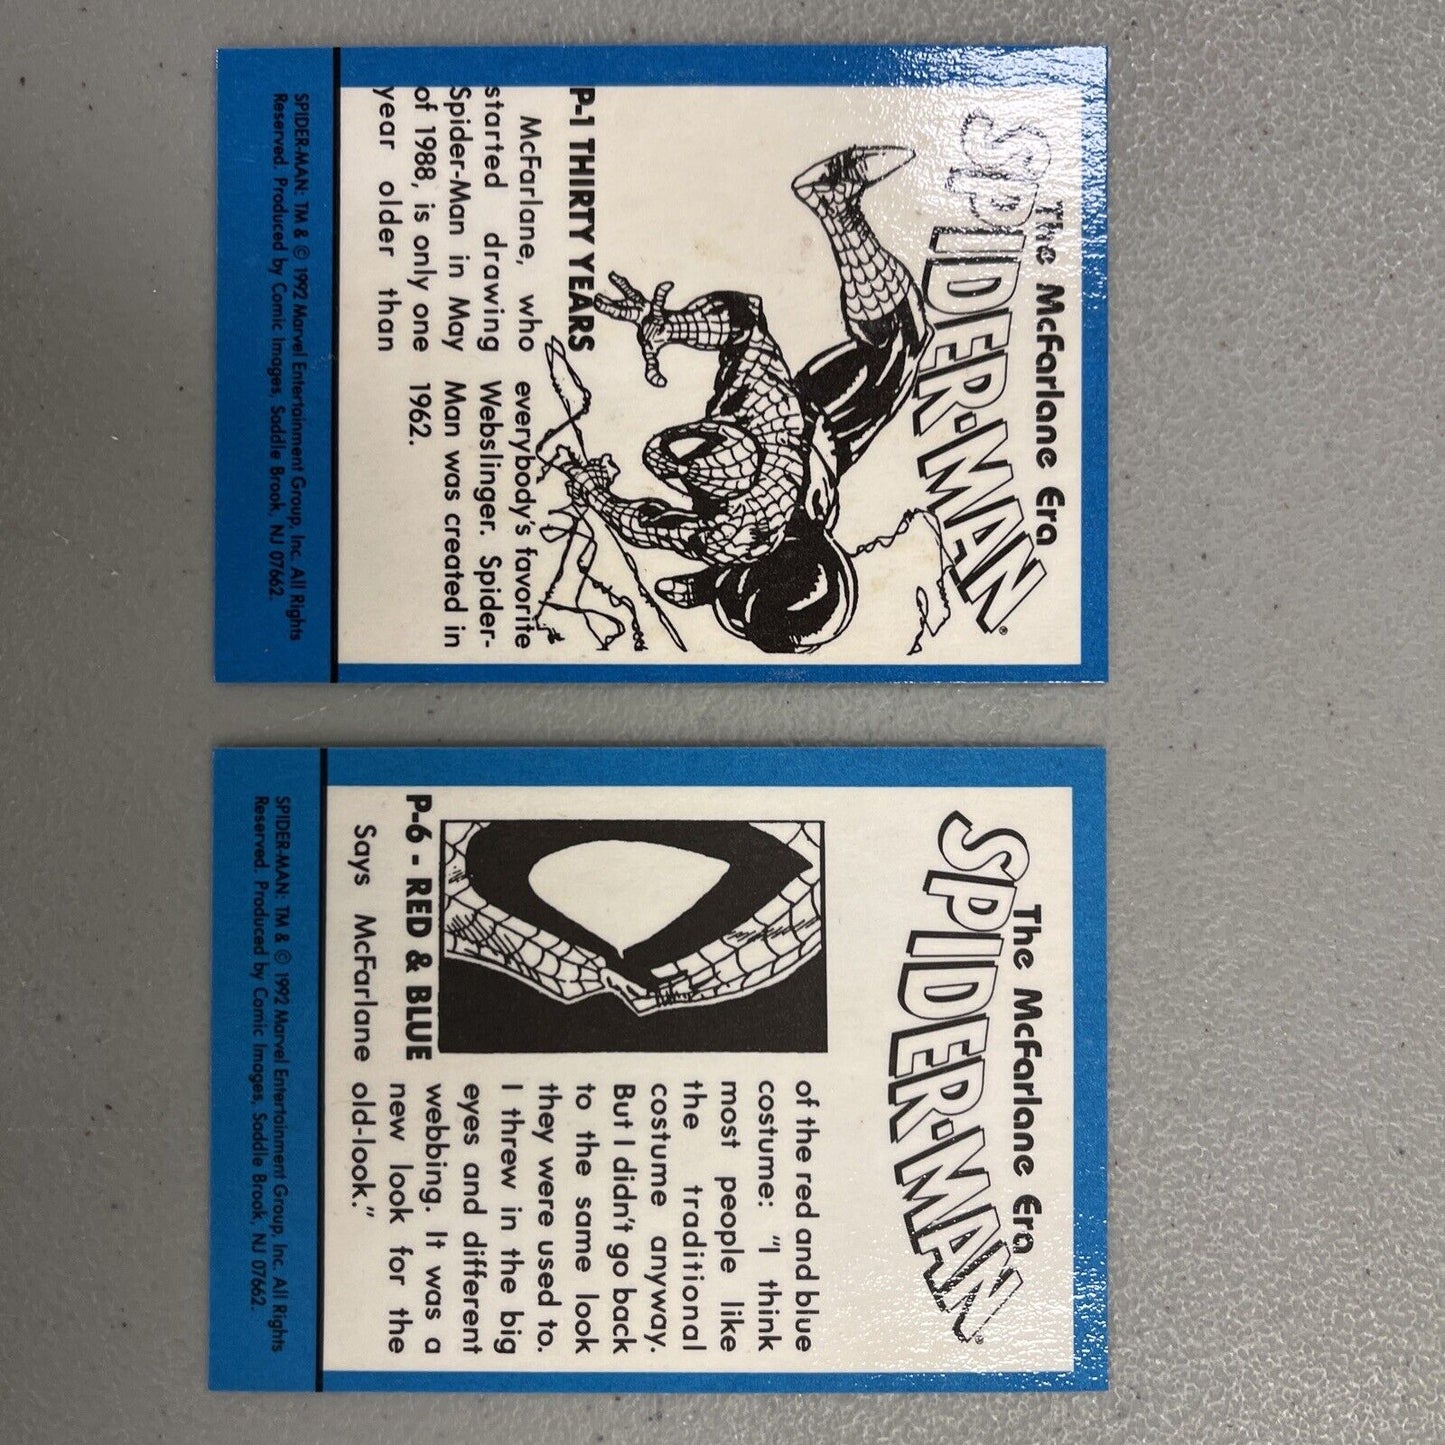 Marvel Spider Man Trading Card Set Mcfarlane 1992 30 Years Prism Set